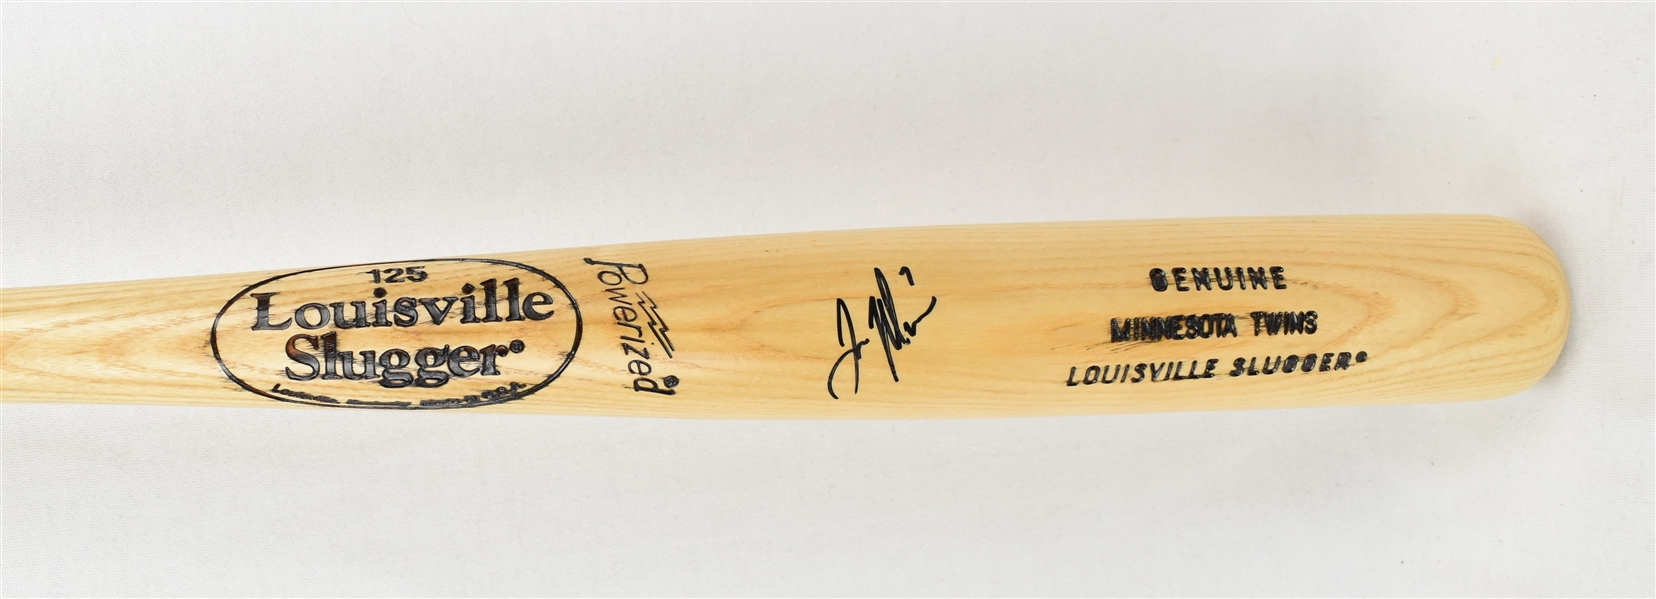 Joe Mauer Autographed Bat